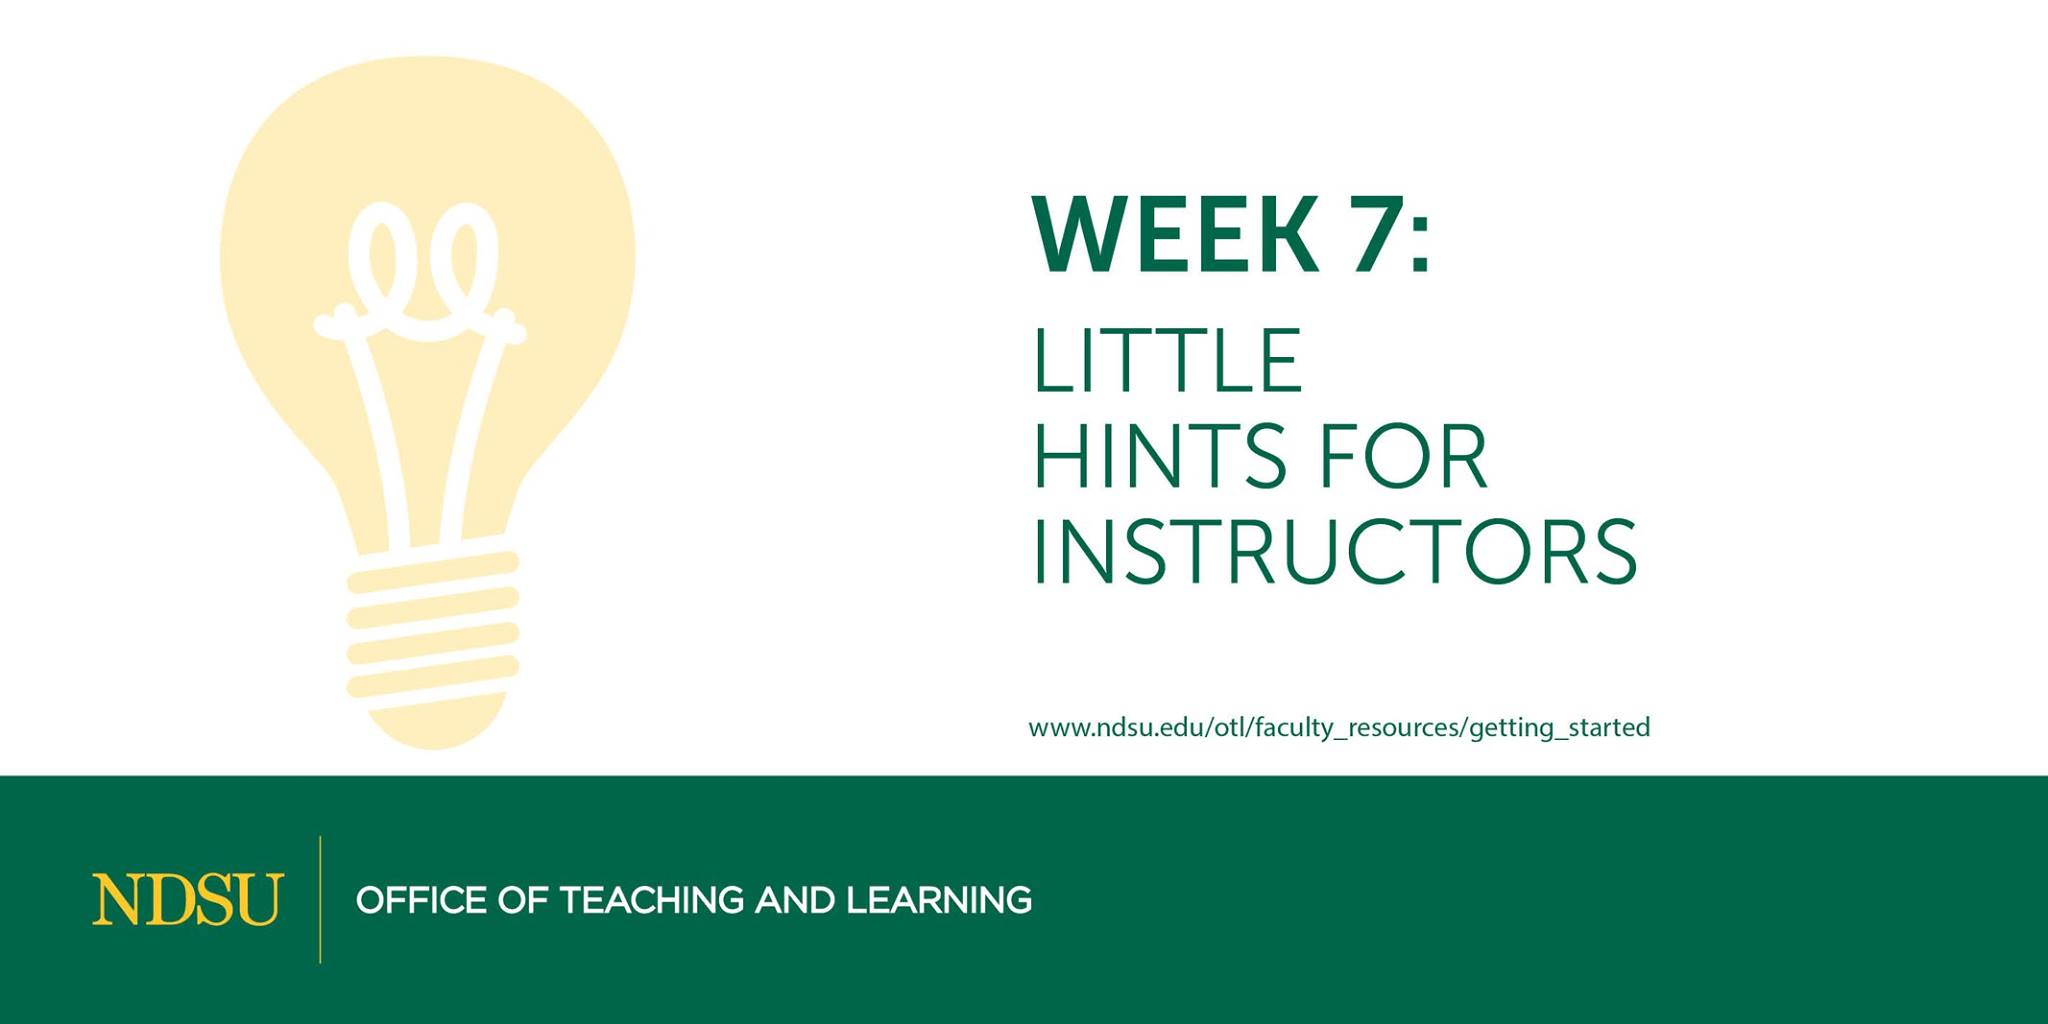 Week 7 Little Hints for Instructors